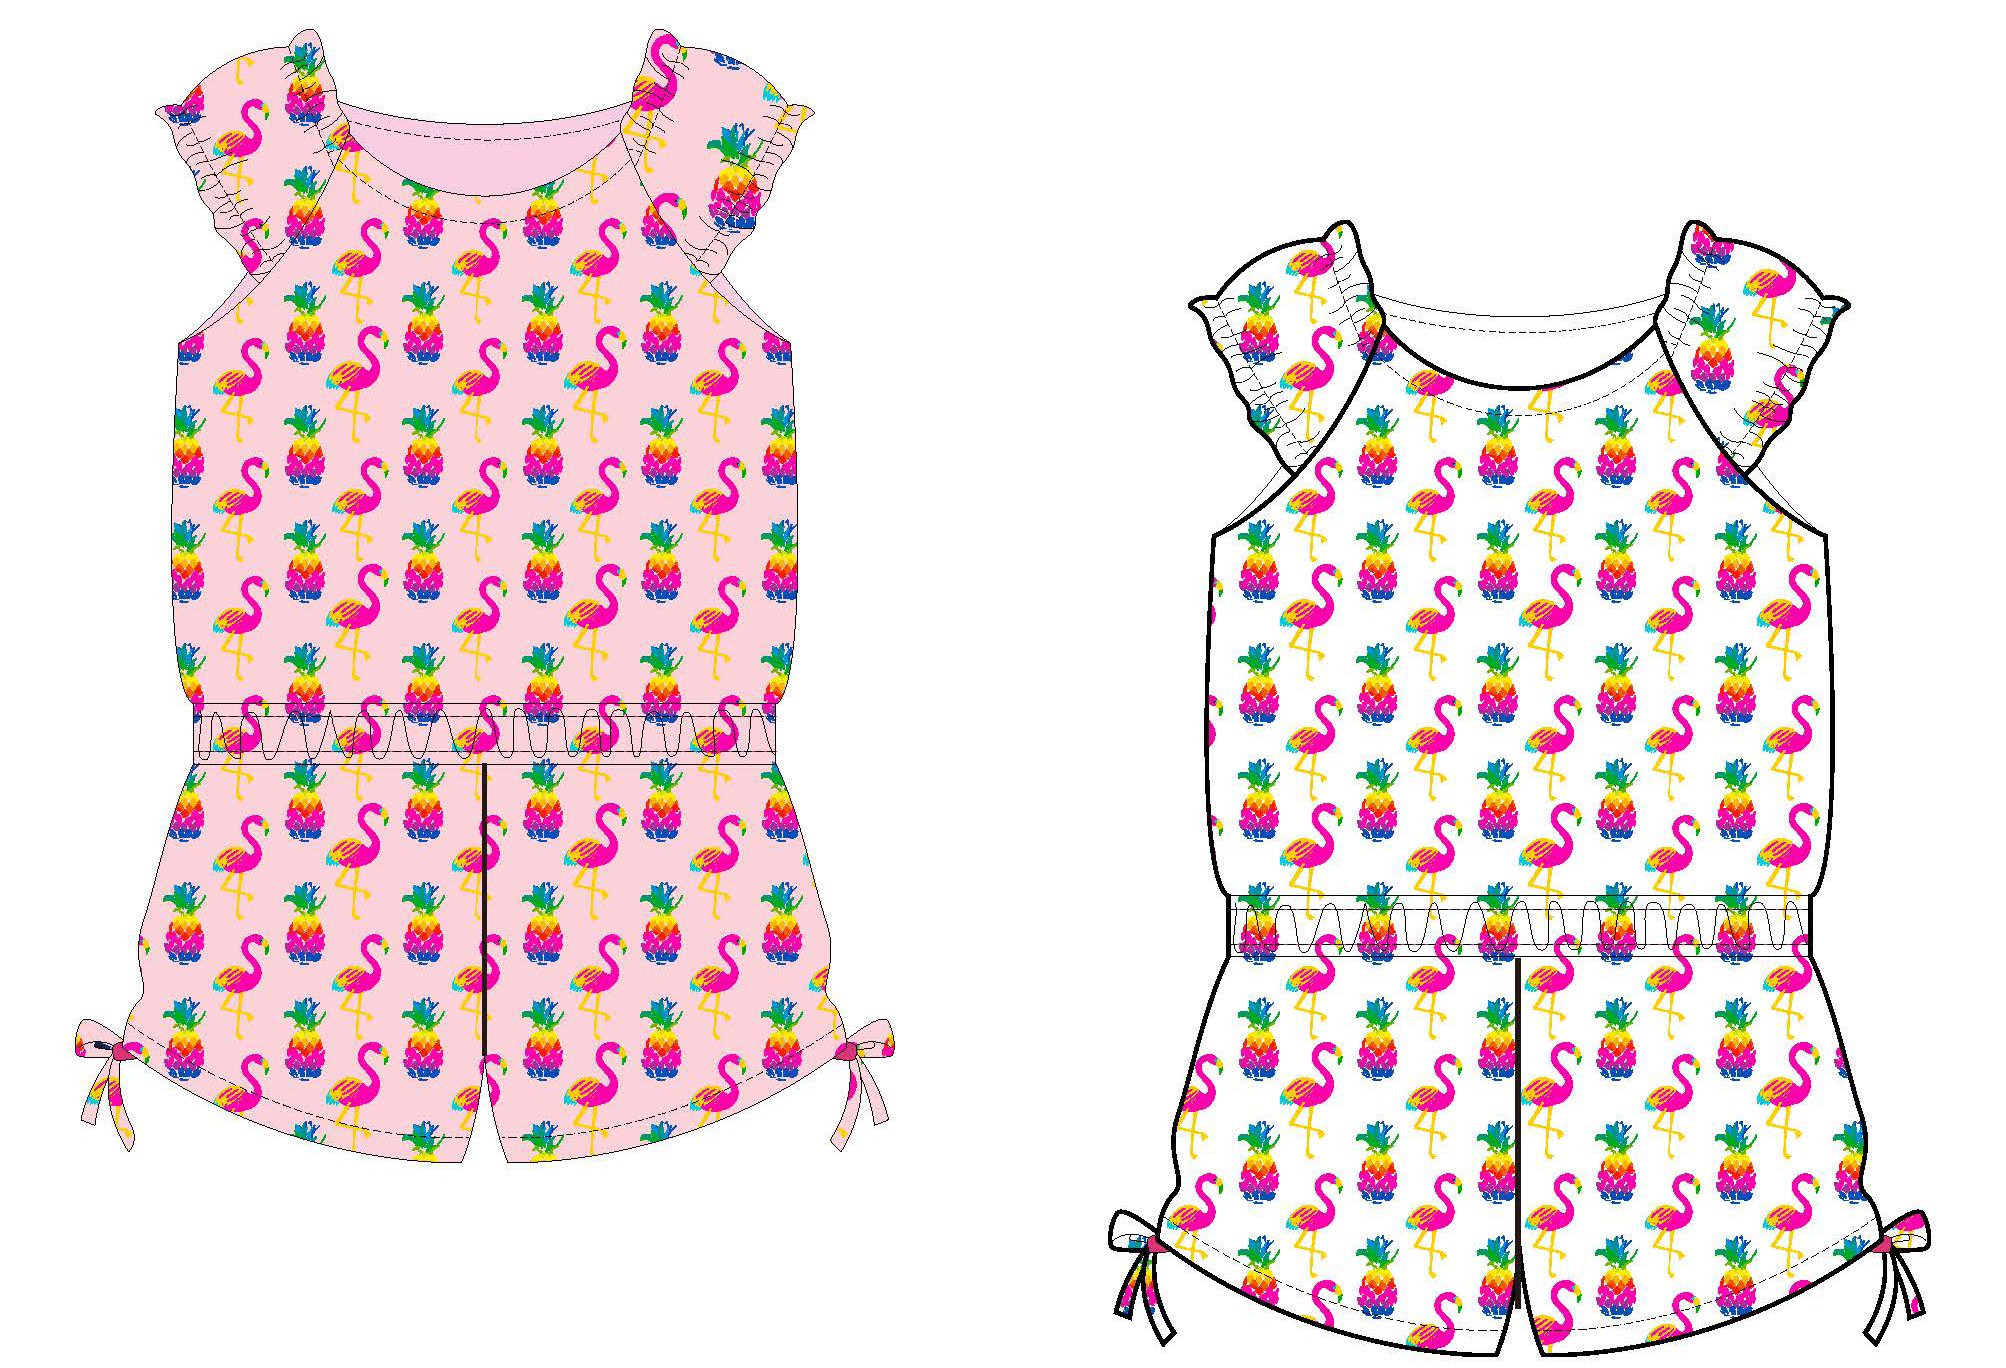 Toddler Girl's Printed Knit Romper DRESS w/ Rainbow Flamingo & Pineapple Print - Size 2T-4T